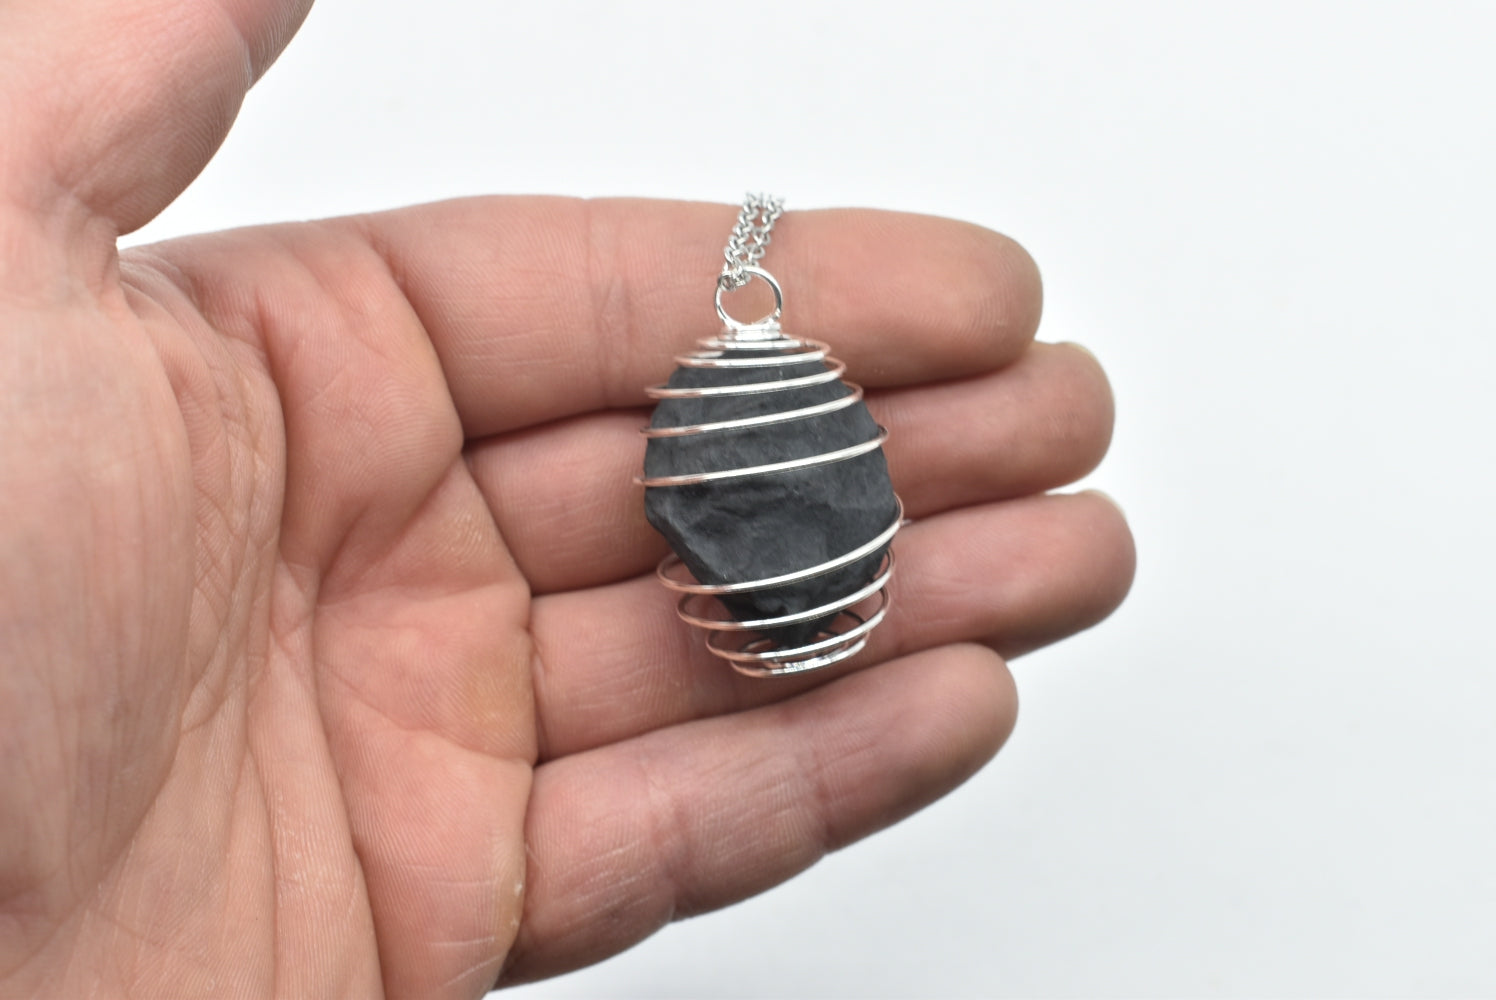 Raw Shungite stone pendant